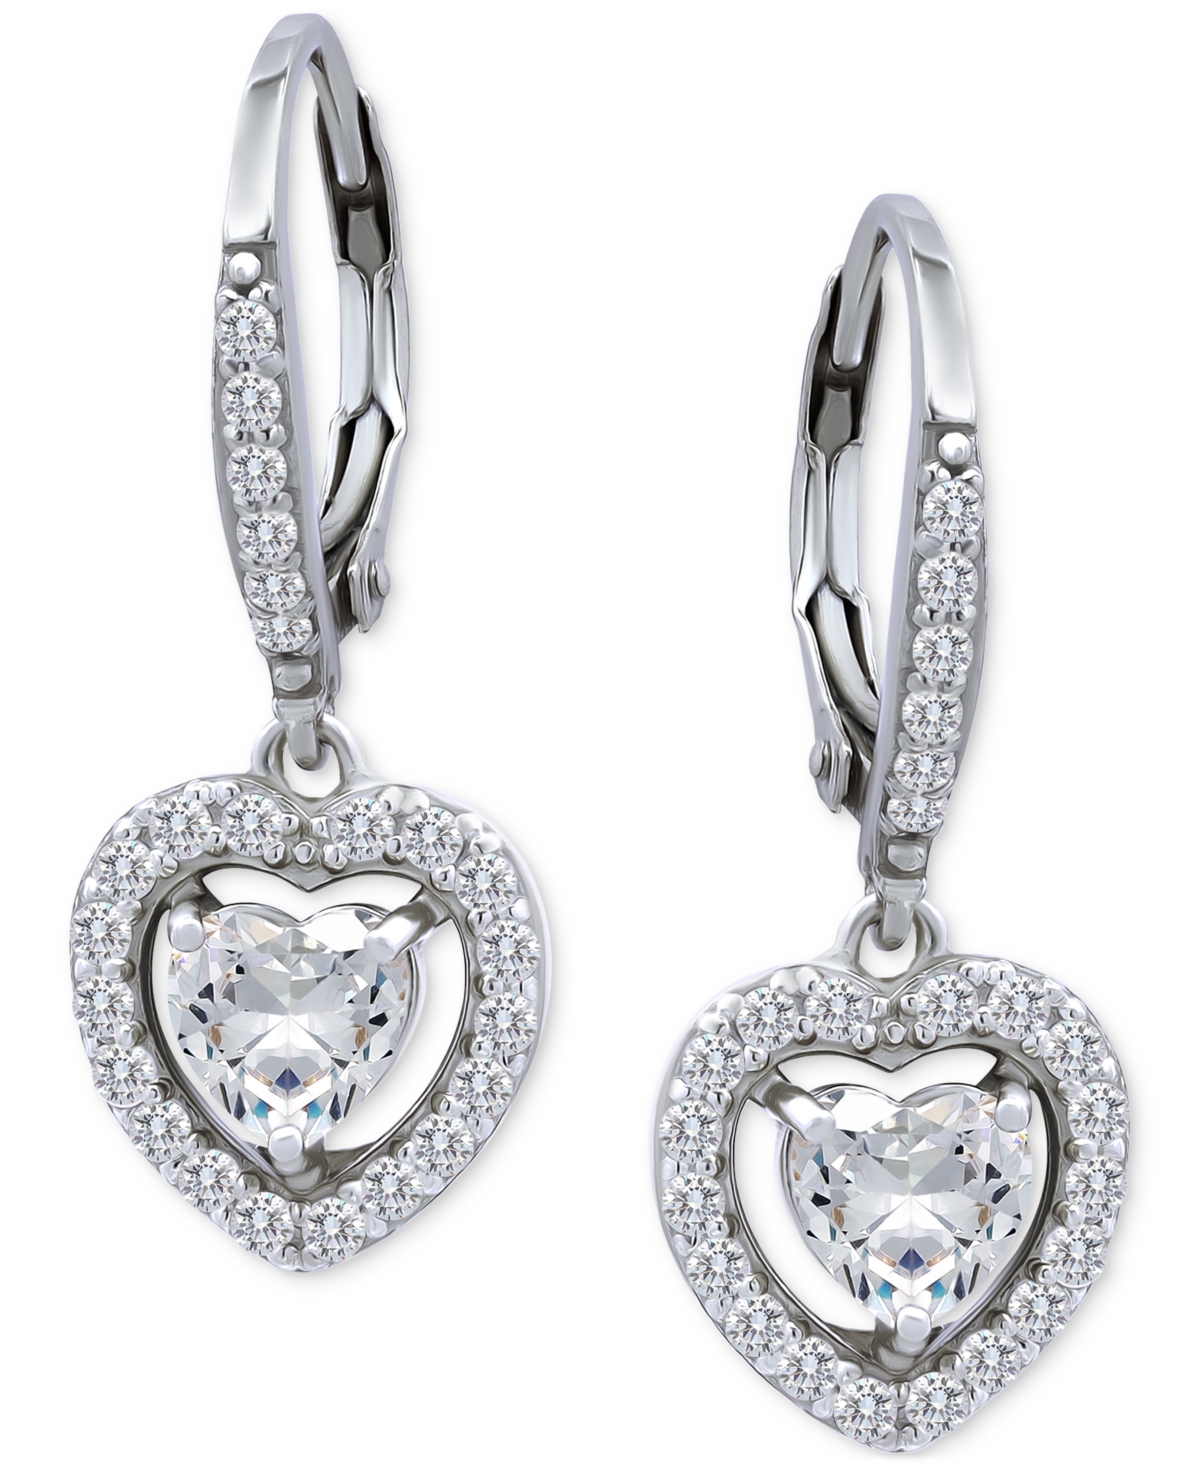 Giani Bernini Cubic Zirconia Leverback Heart Drop Earrings In Sterling Silver, Created For Macy's In Gold